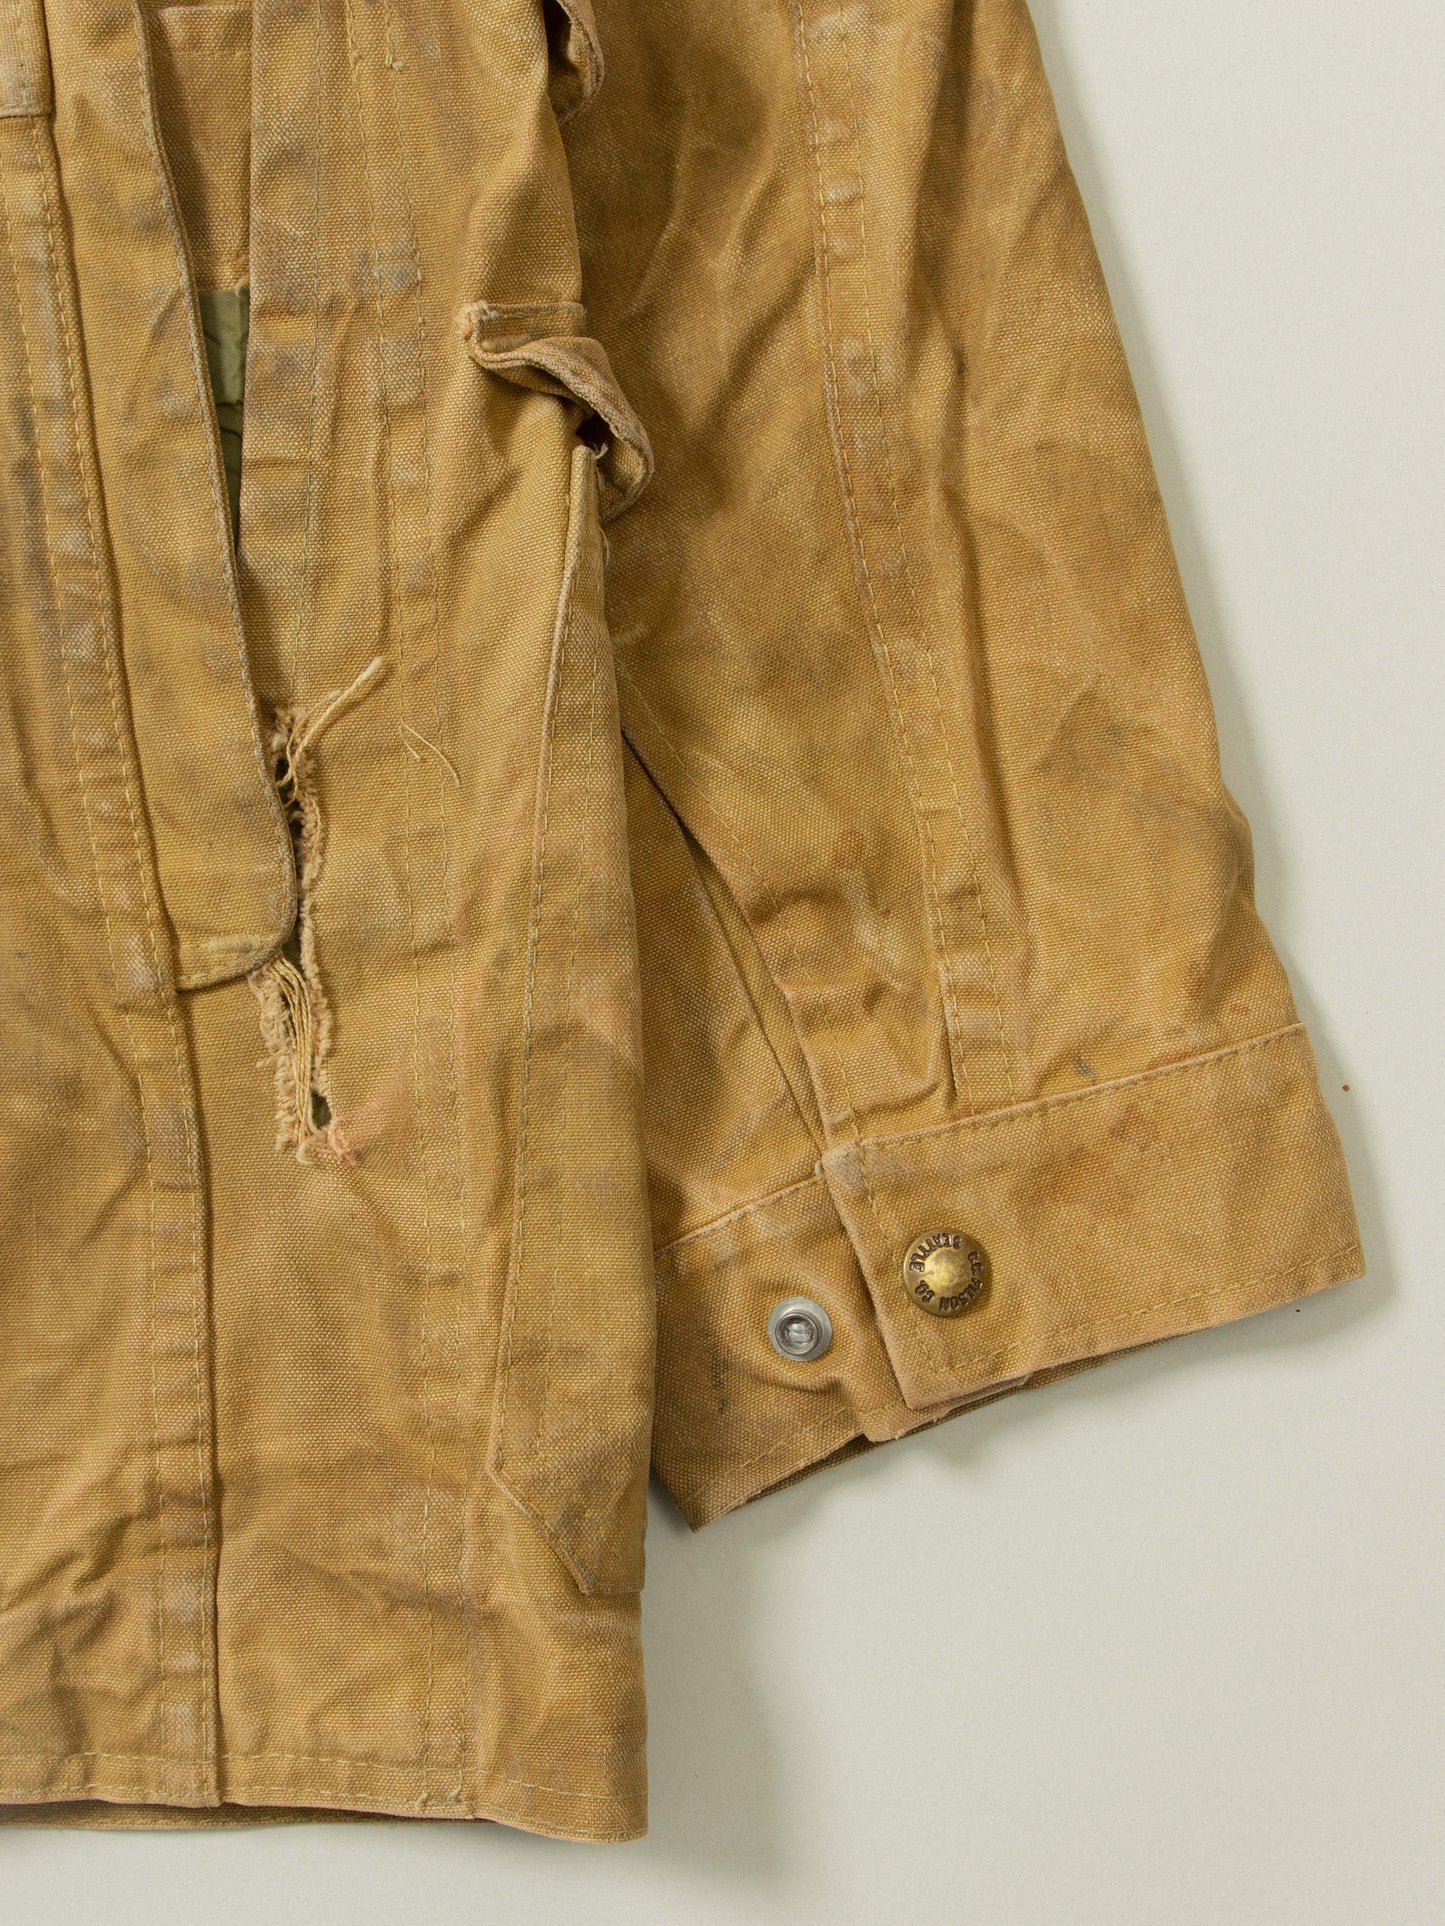 Vtg 1960s Filson Garment Hunting Jacket - Made in USA (M)